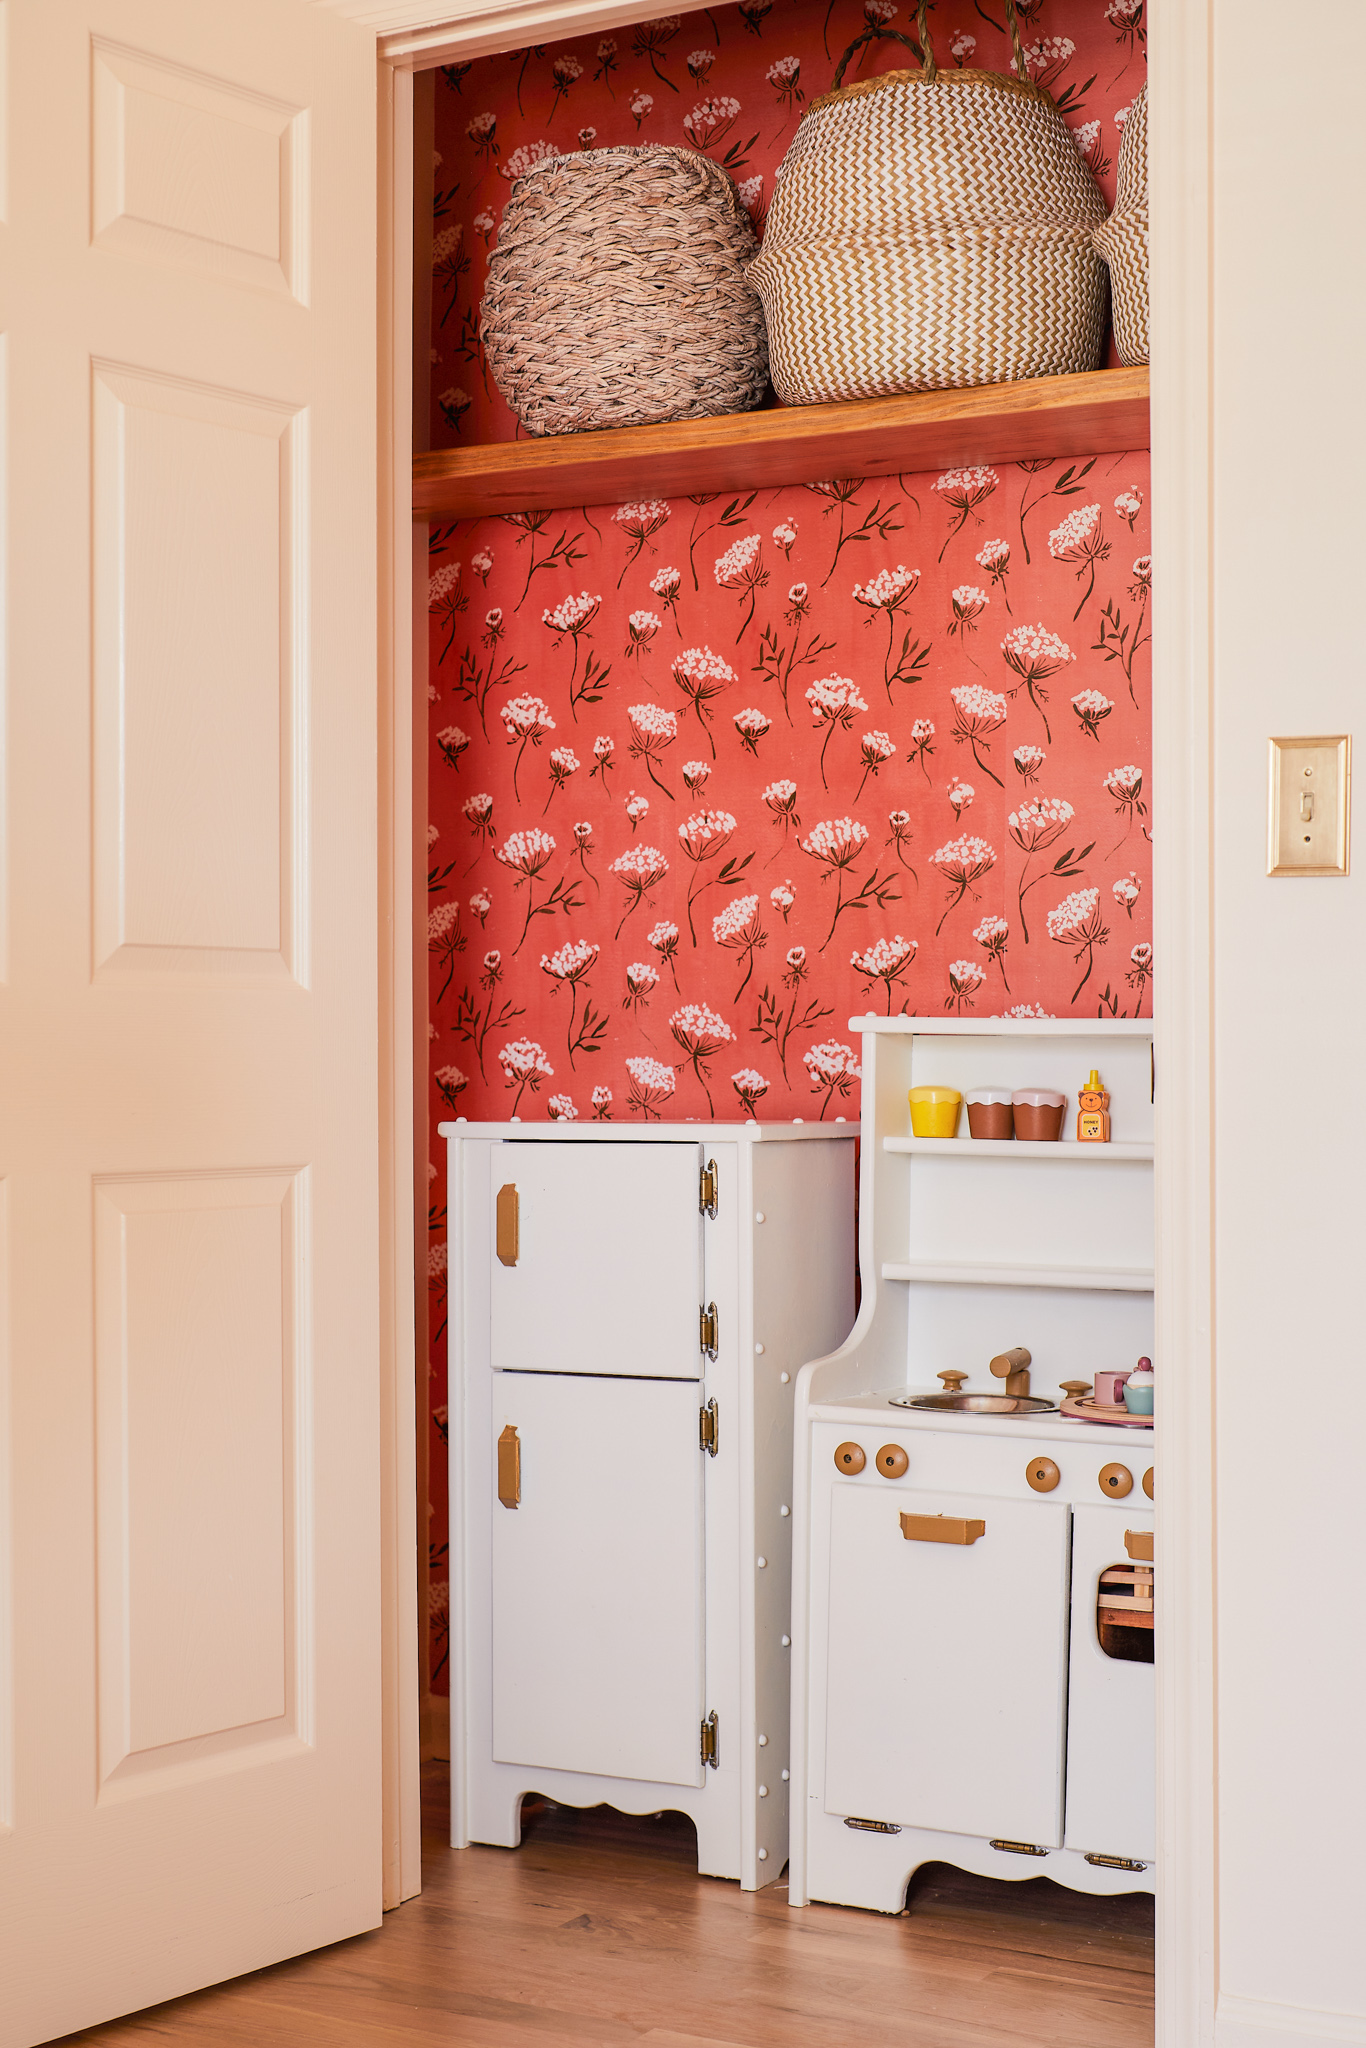 closet wallpaper, play kitchen set, closet storage